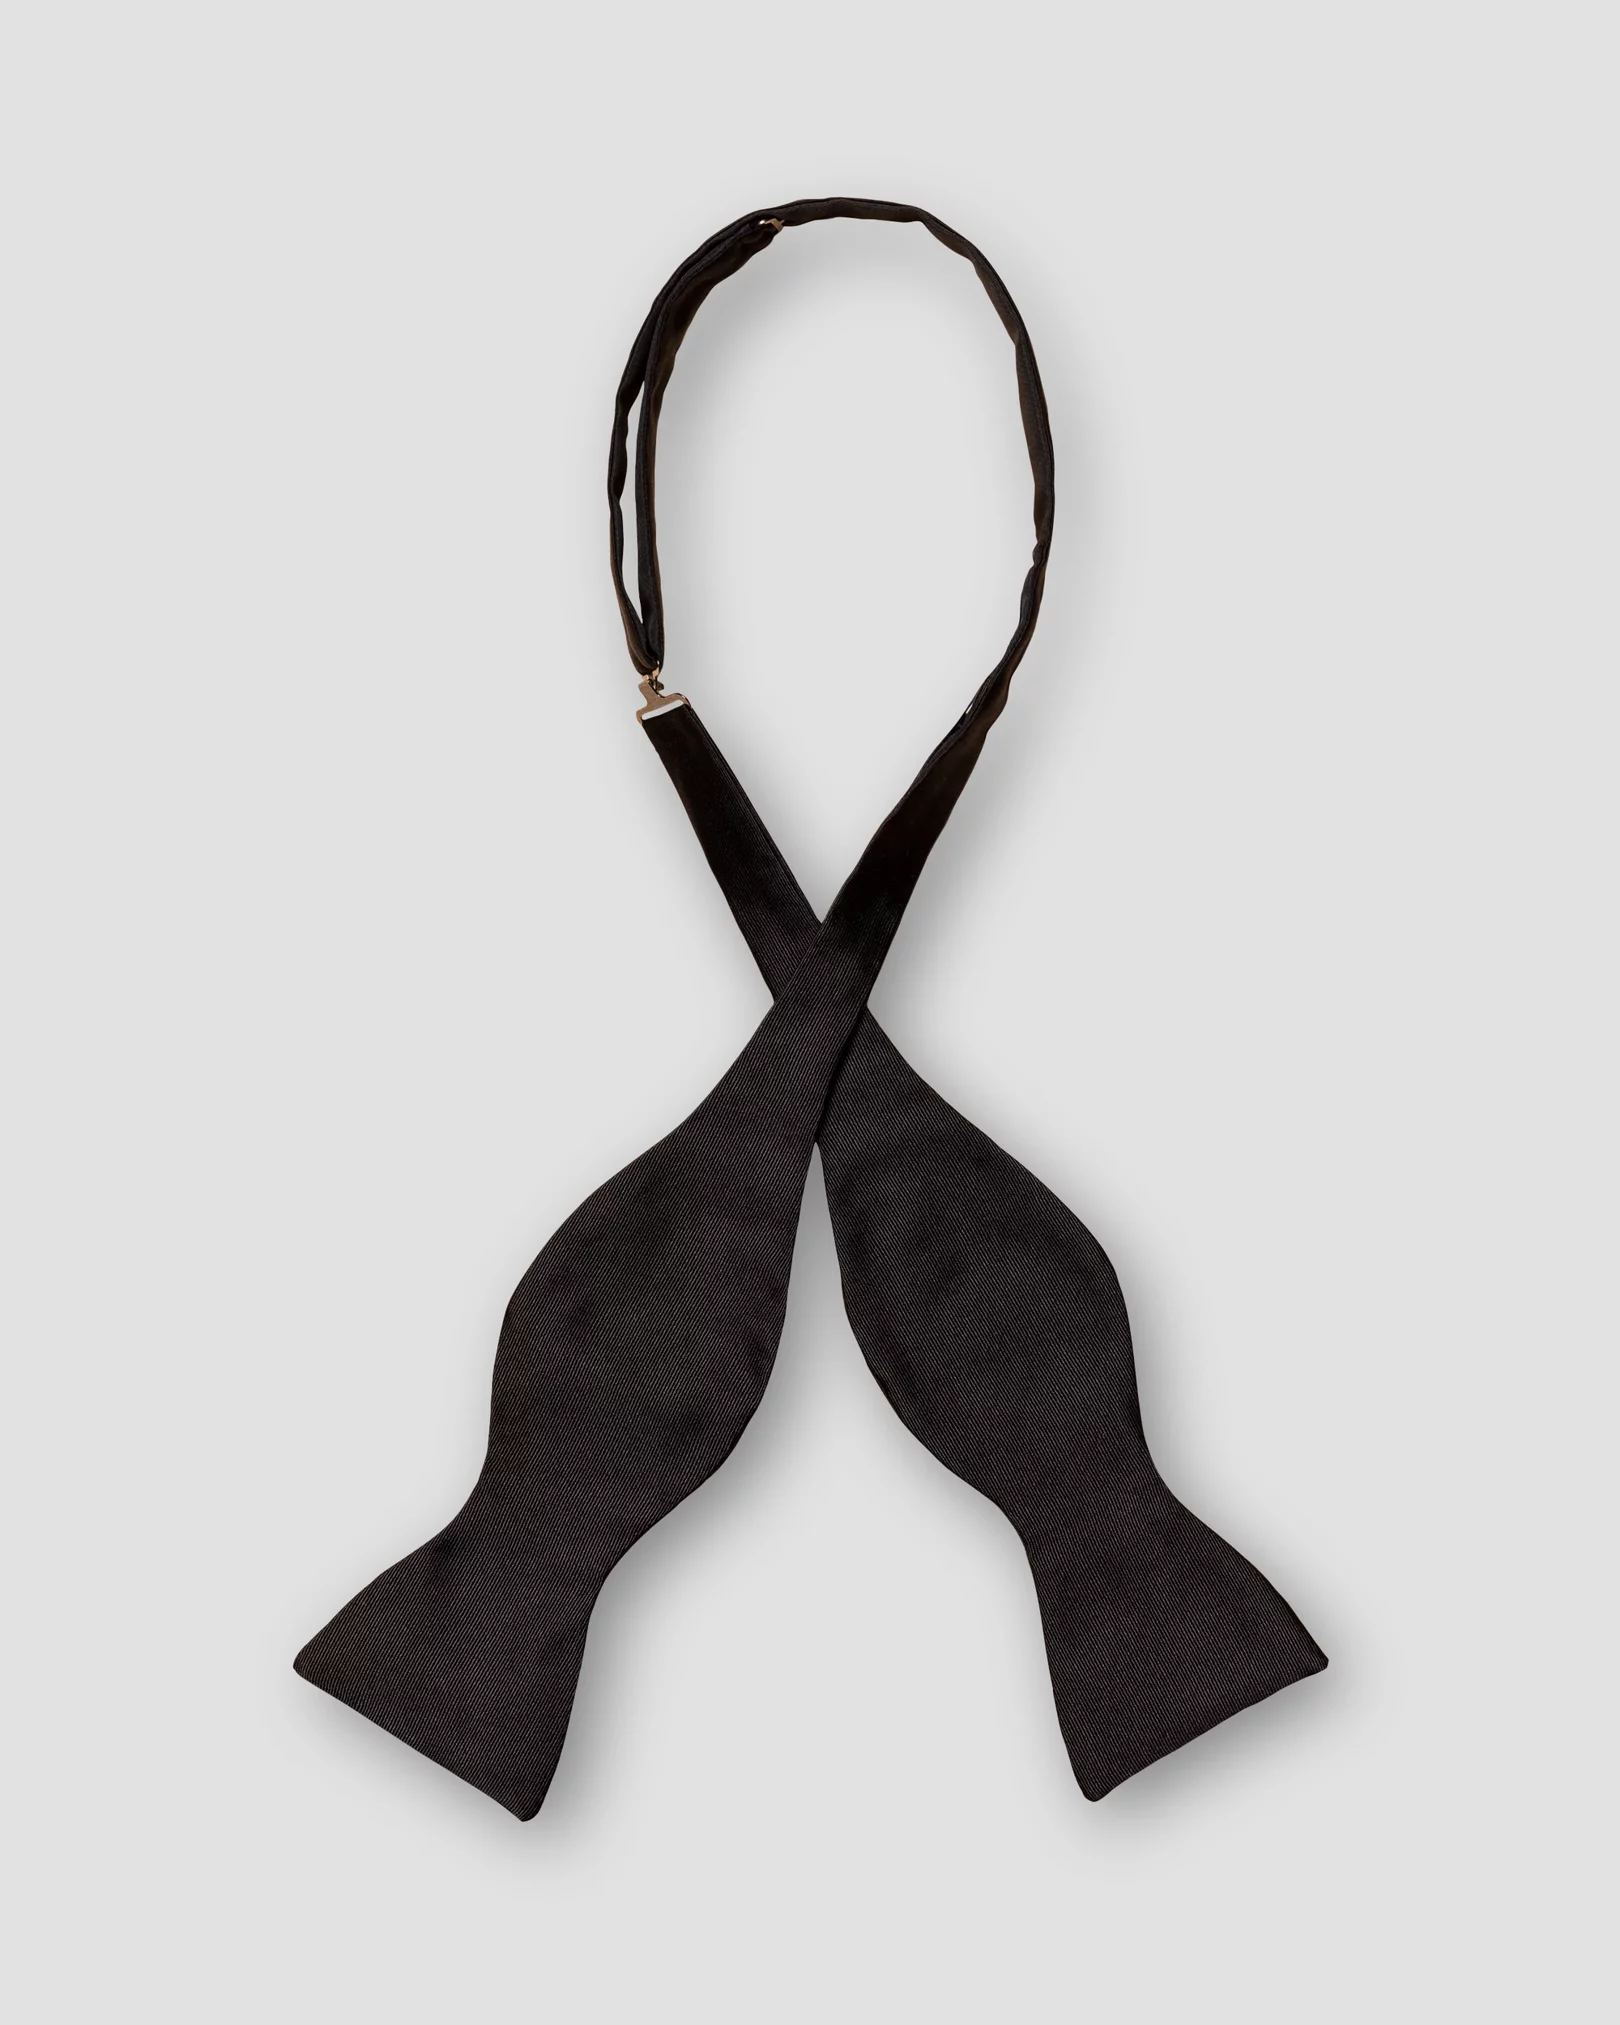 Eton - black bow tie self tied dressed